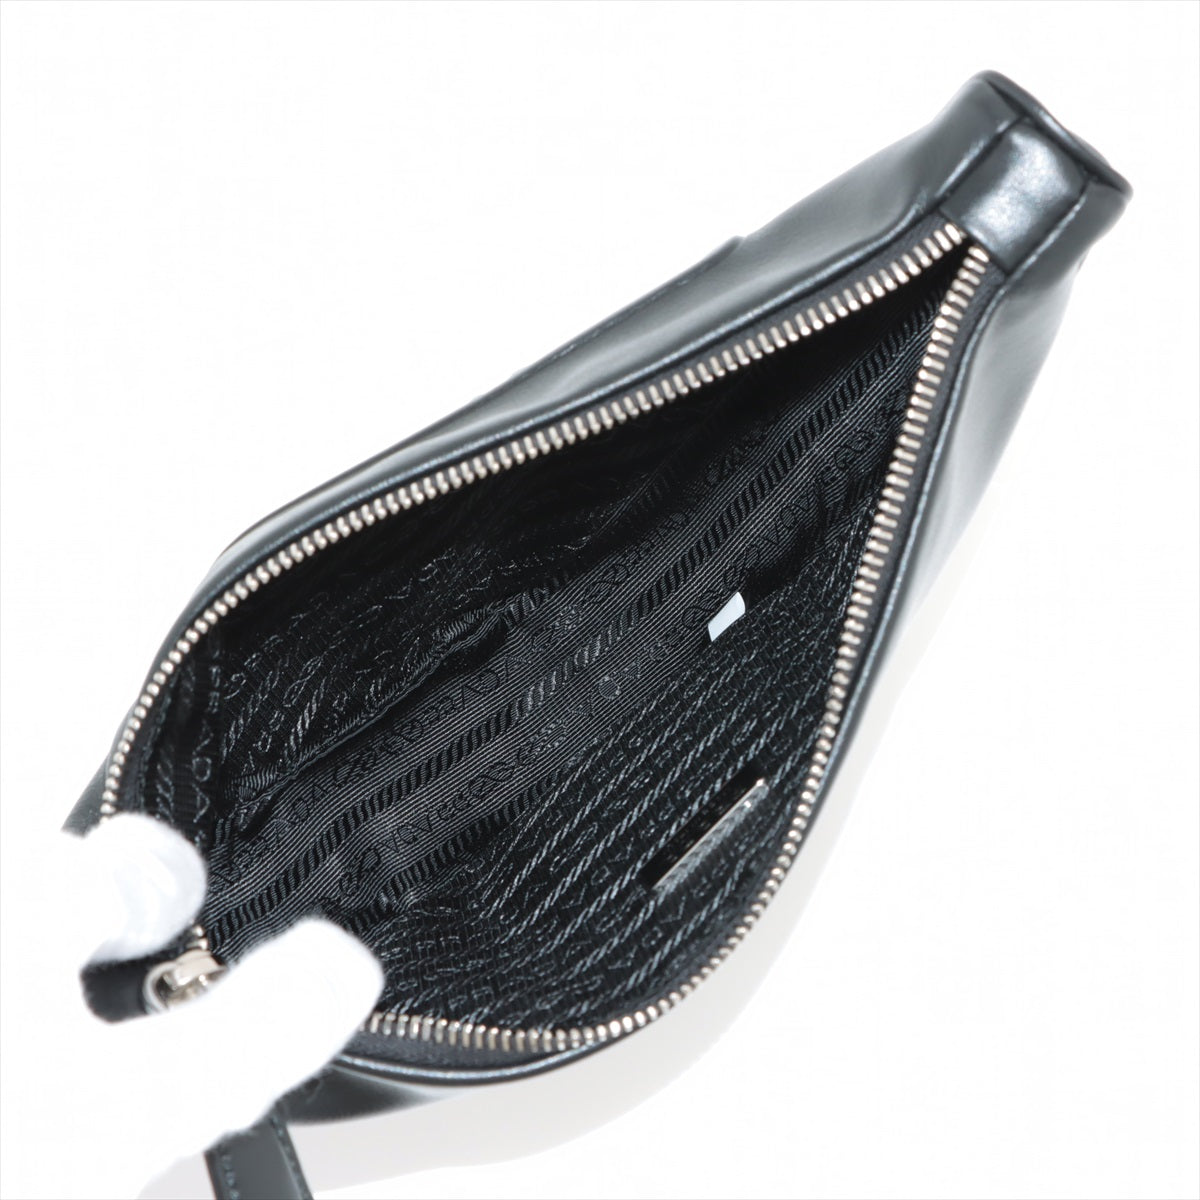 Prada Triangle Leather Clutch Bag Black